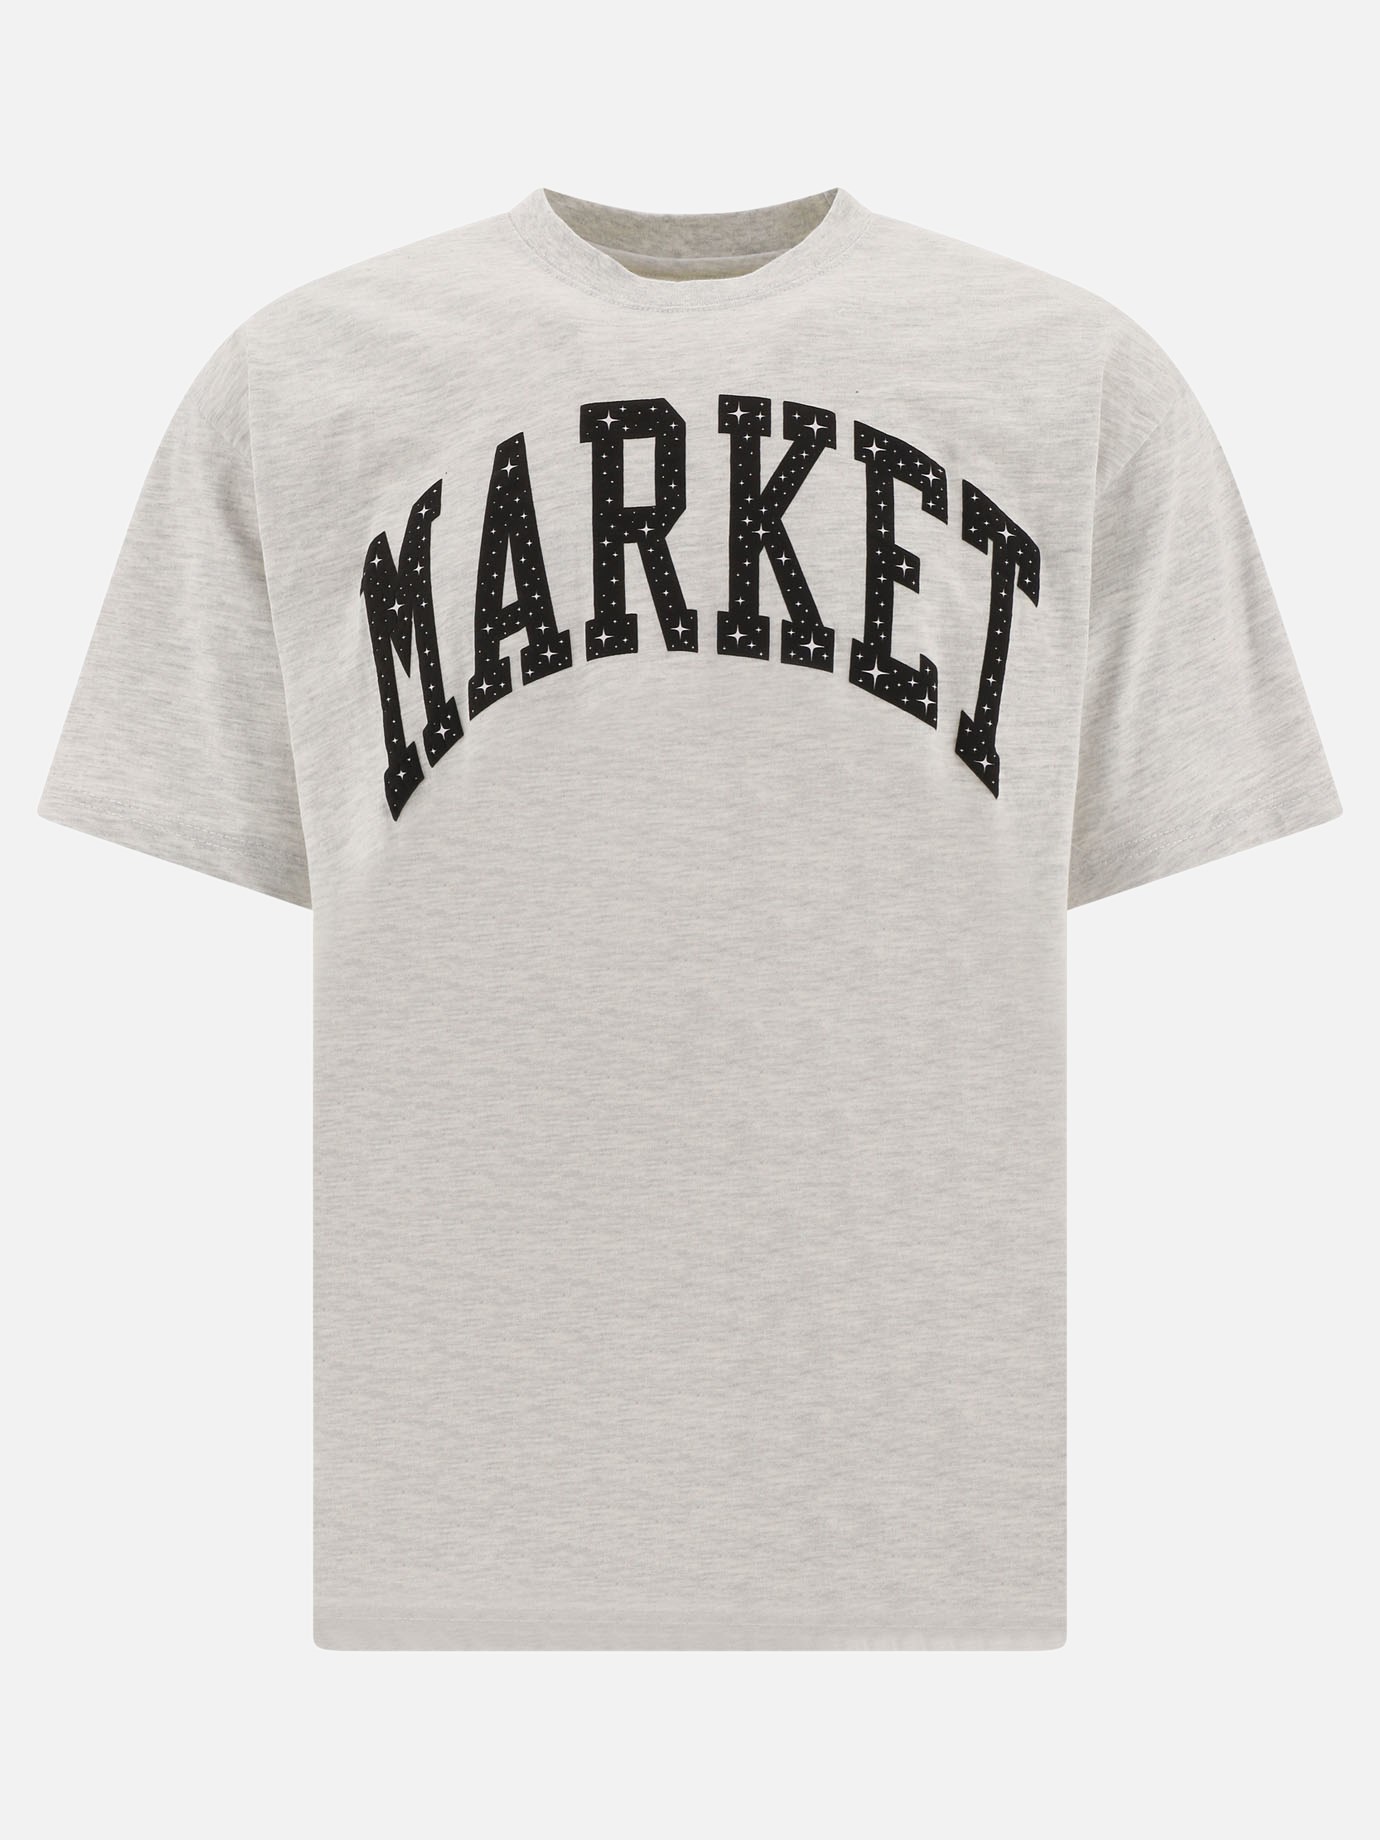 T-shirt  Market Arc by Market - 4